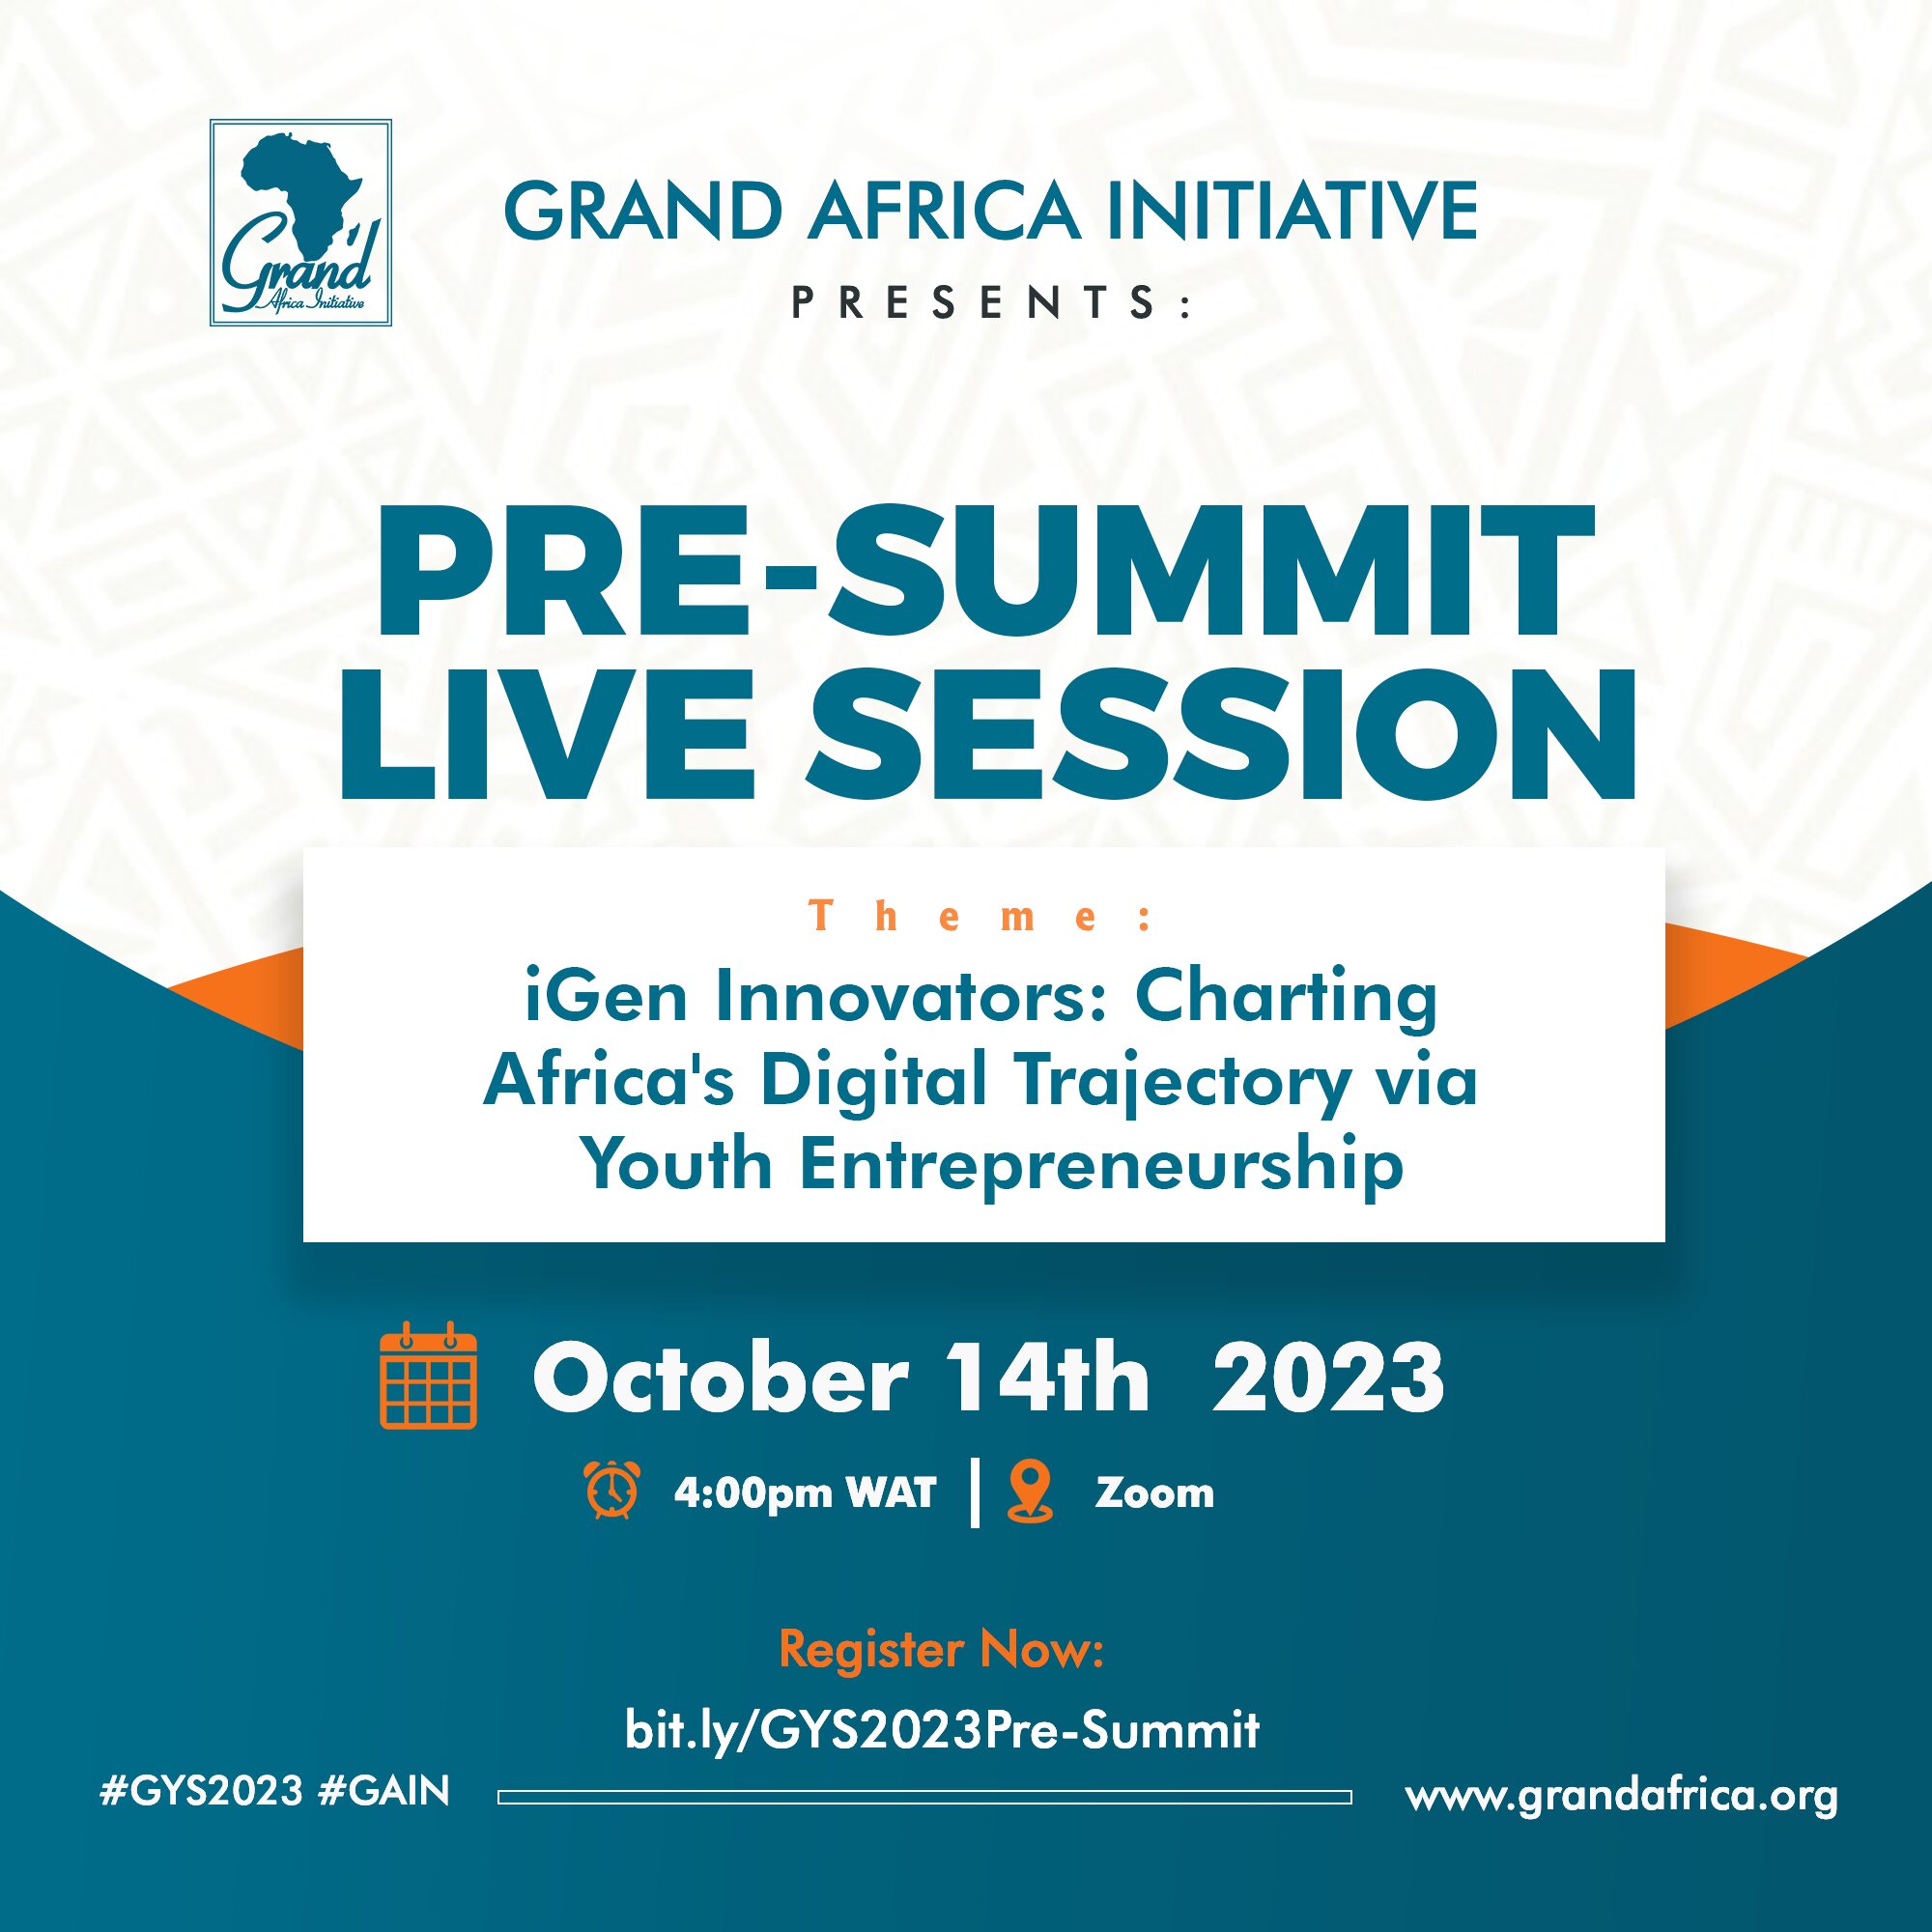 GAIN PRE-SUMMIT LIVE SESSION  |  iGen Innovators: Charting Africa's Digital Trajectory via Youth Entrepreneurship